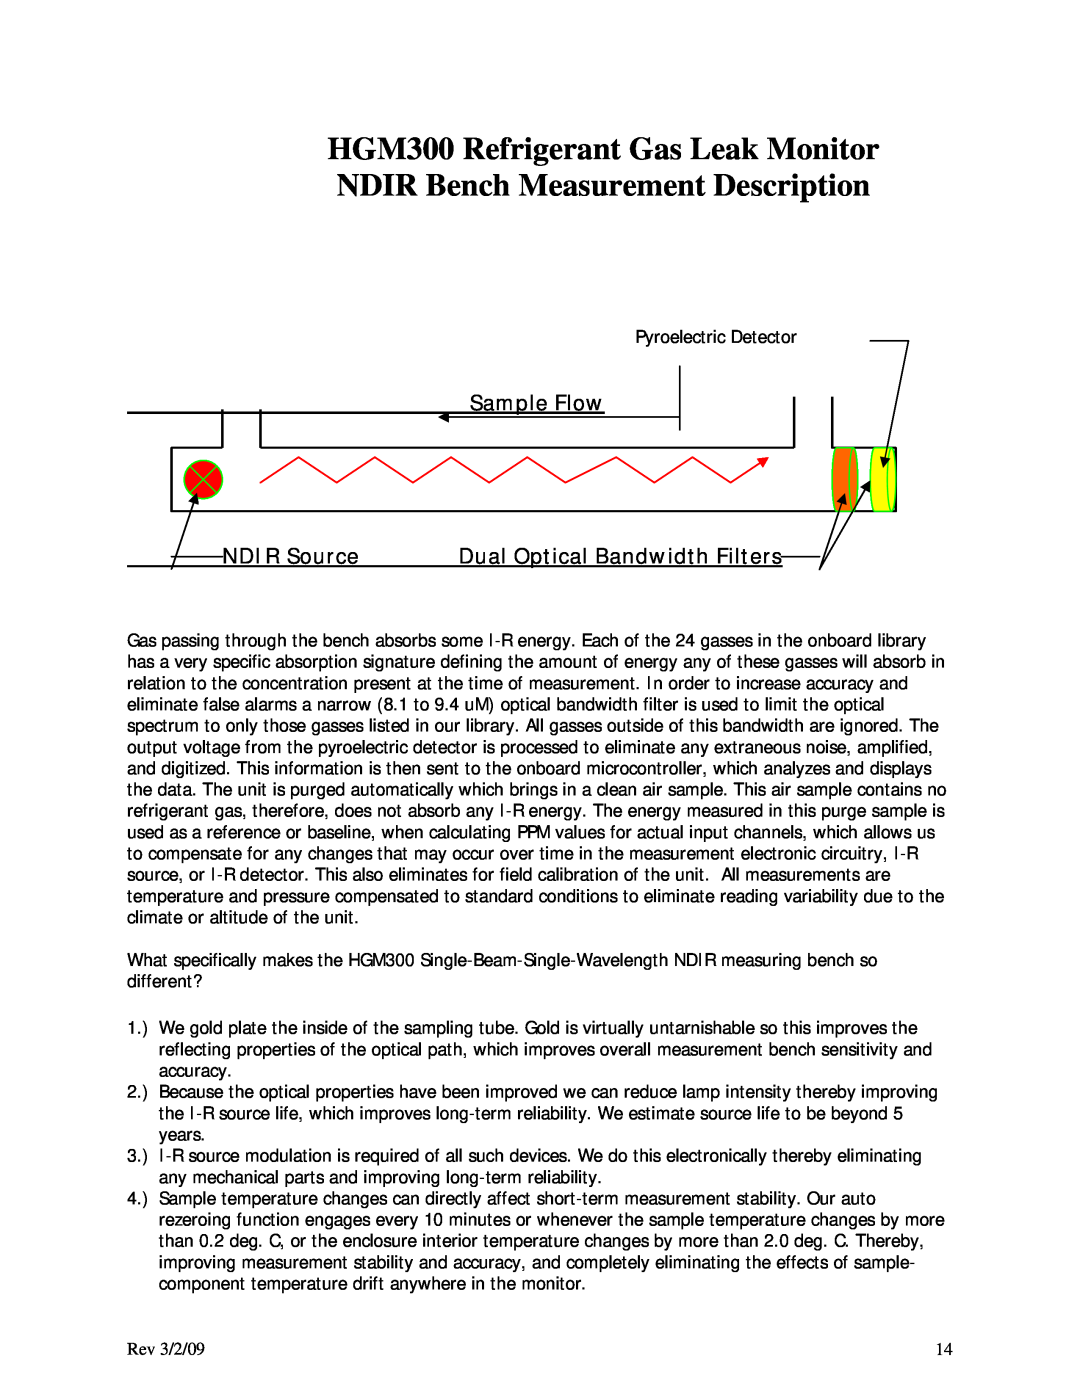 Bacharach RDM800 warranty Sample Flow, NDIR Source, HGM300 Refrigerant Gas Leak Monitor, NDIR Bench Measurement Description 